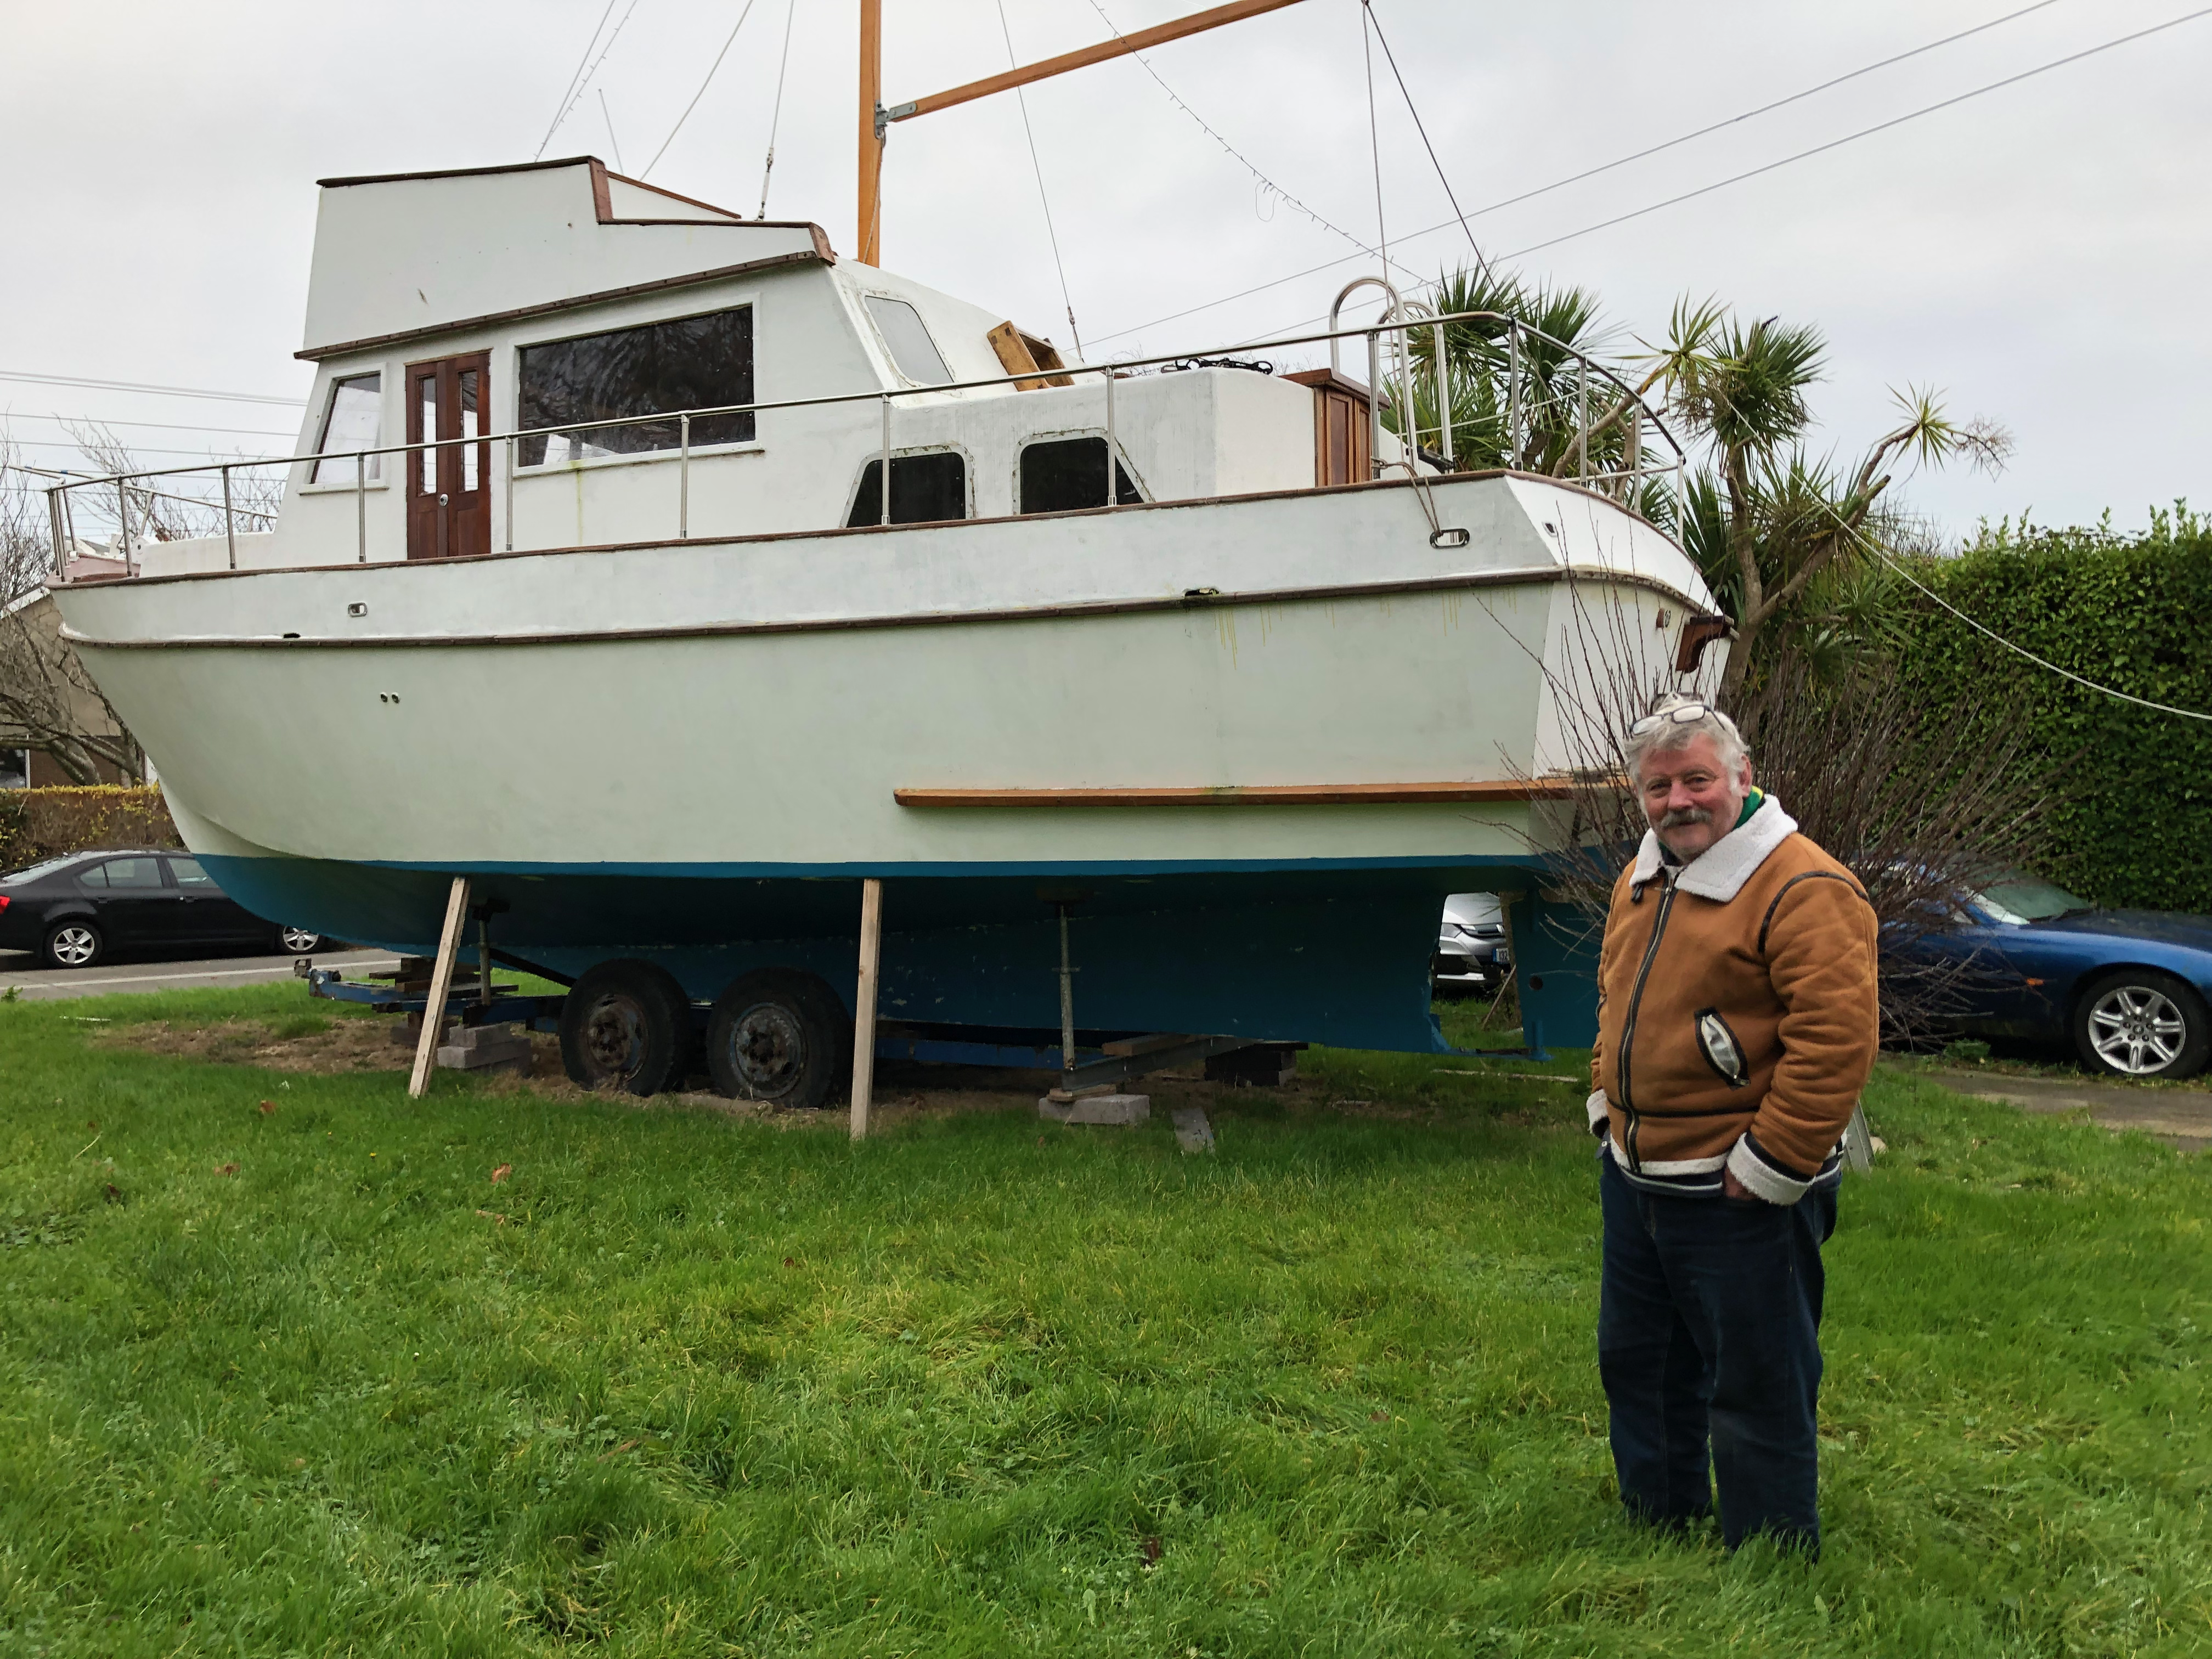 Home built boat in Dublin front garden (Part 2) | Season 2 – Episode 10